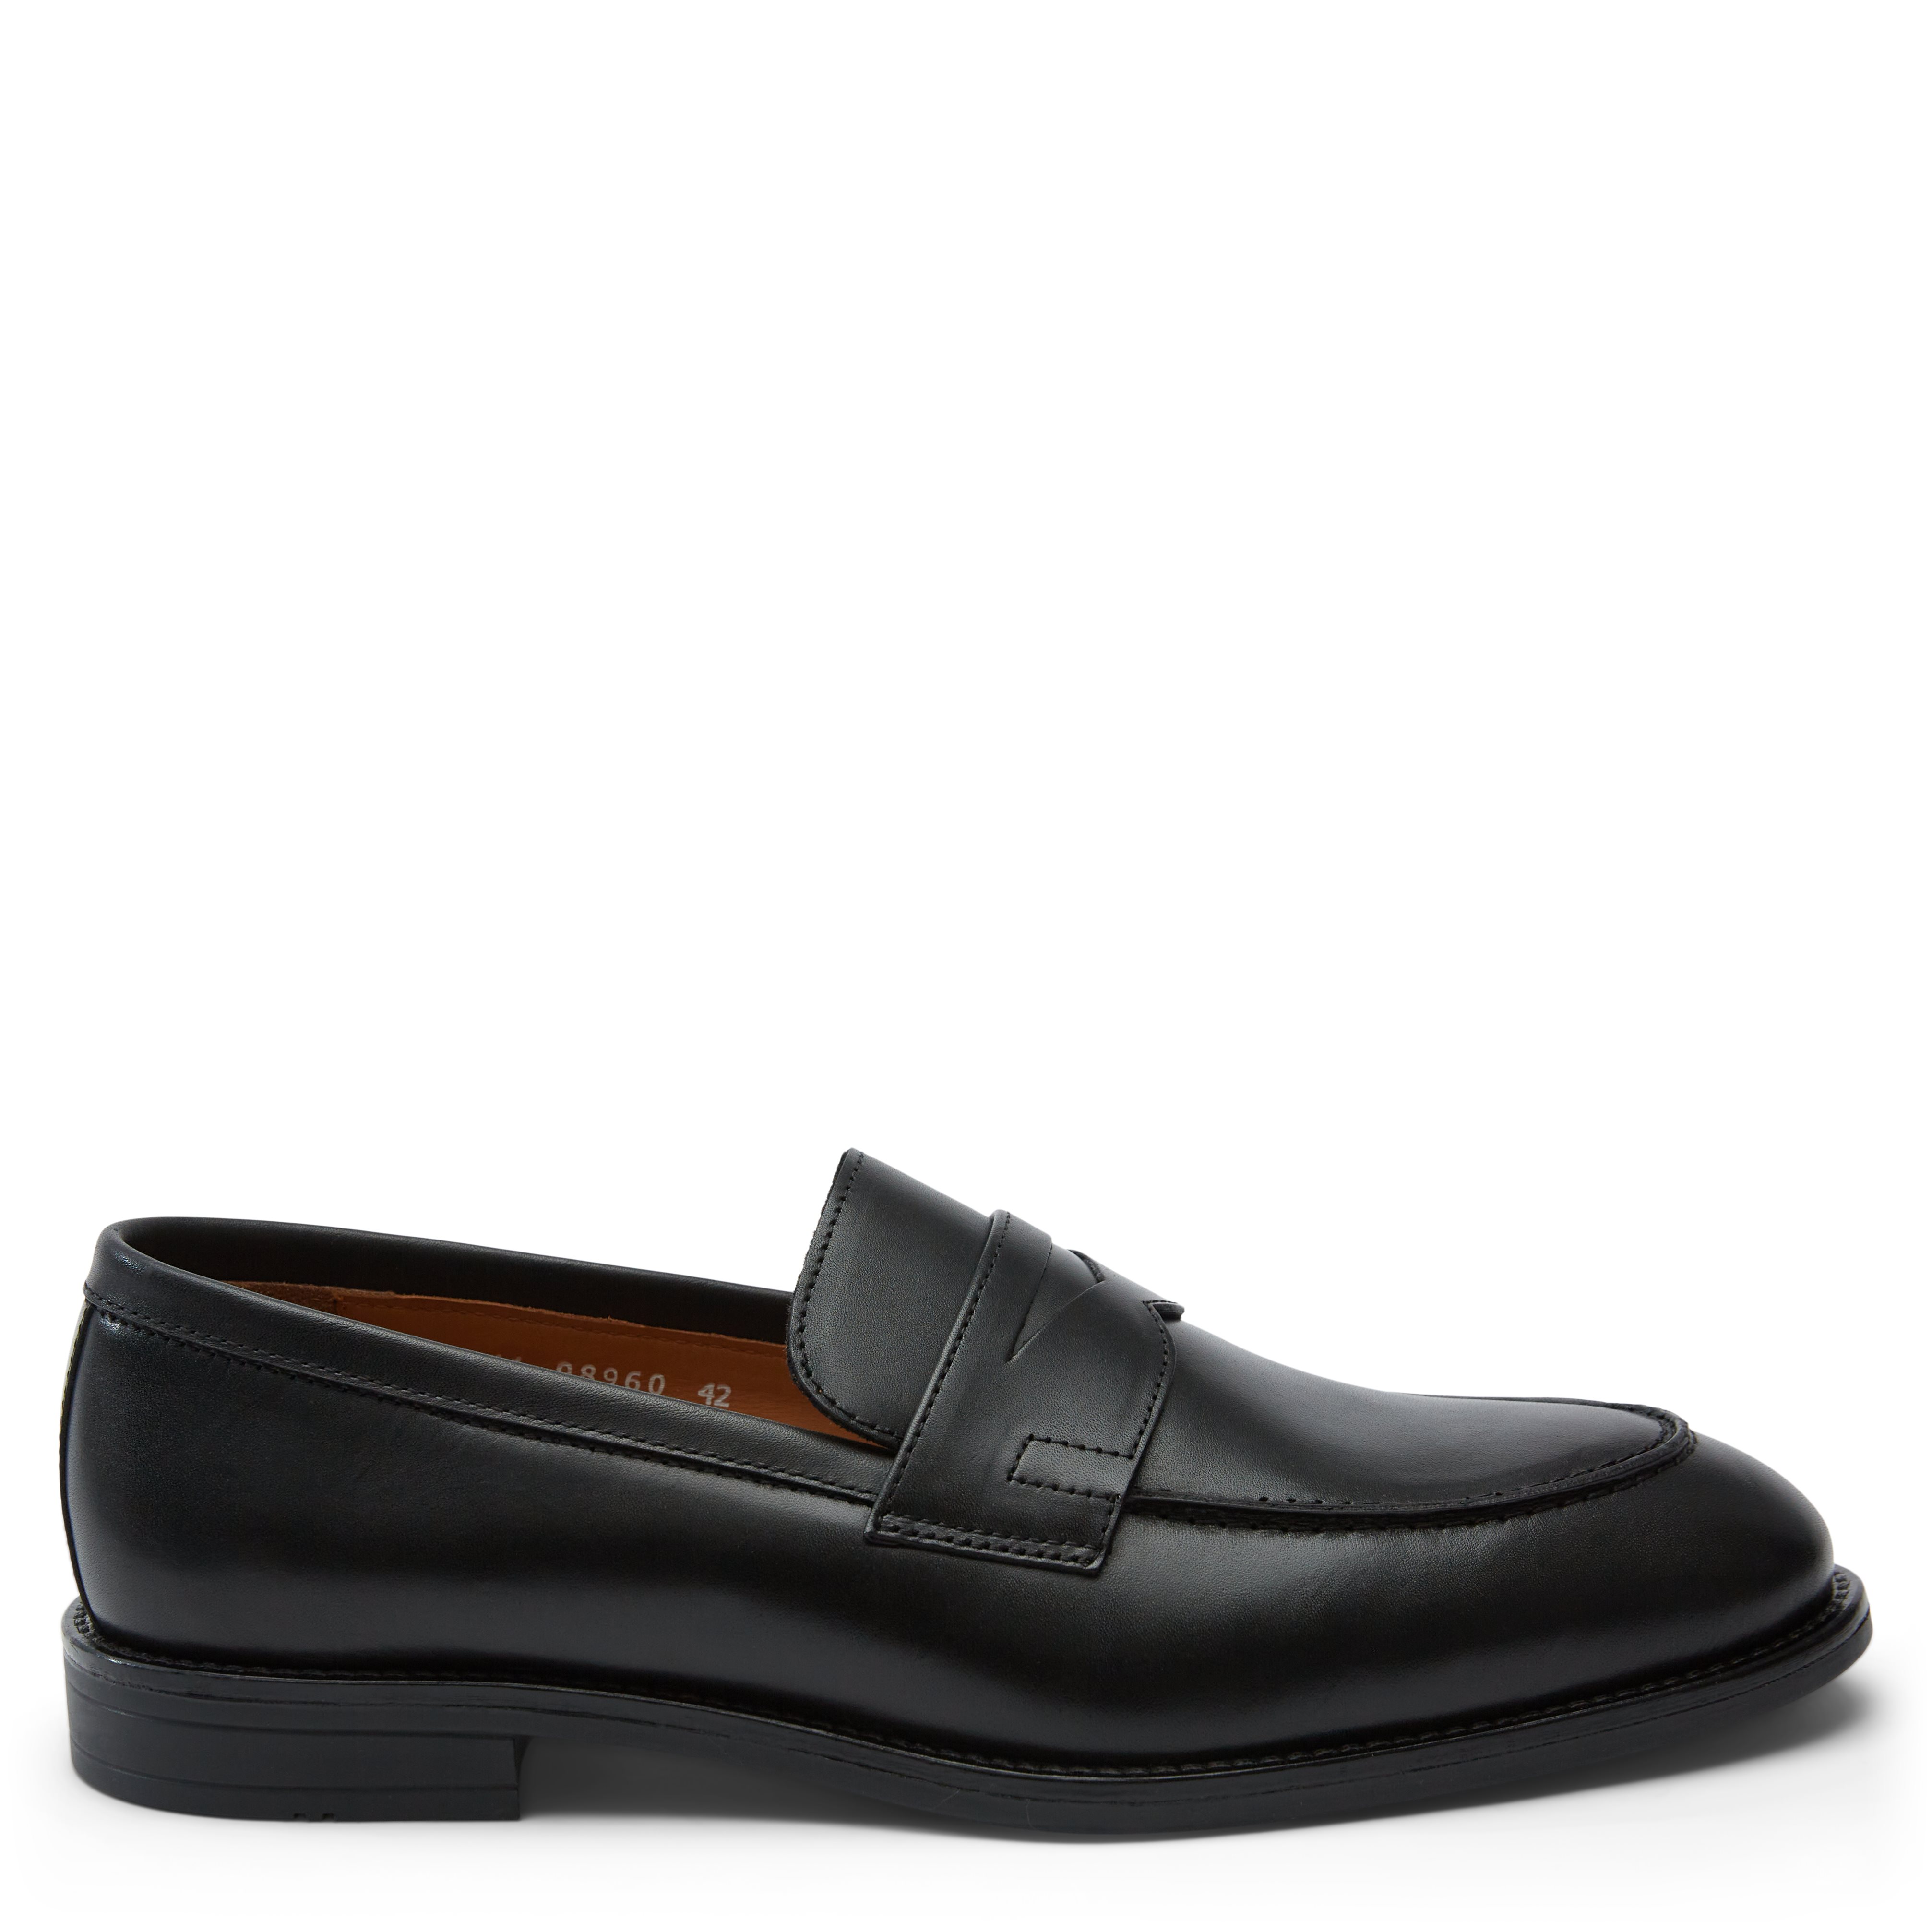 Ahler Shoes A41 98960 Black